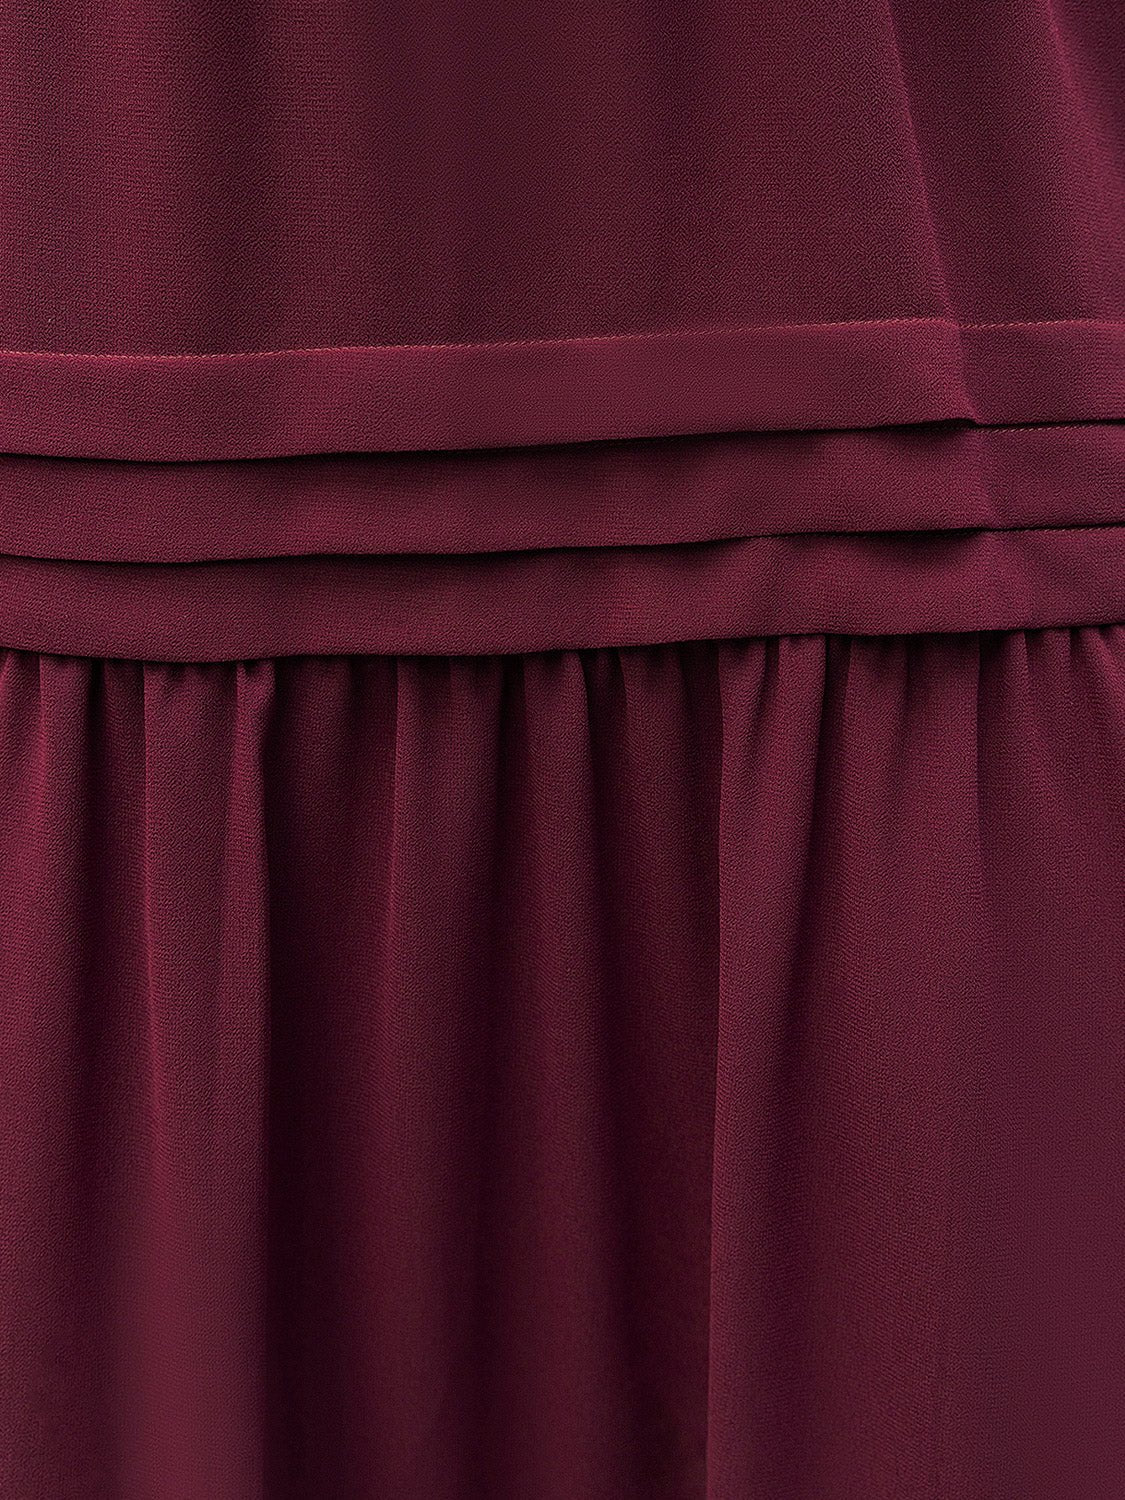 Plus Size Ballon Sleeve Tiered Maxi Dress in WineMaxi DressBeach Rose Co.